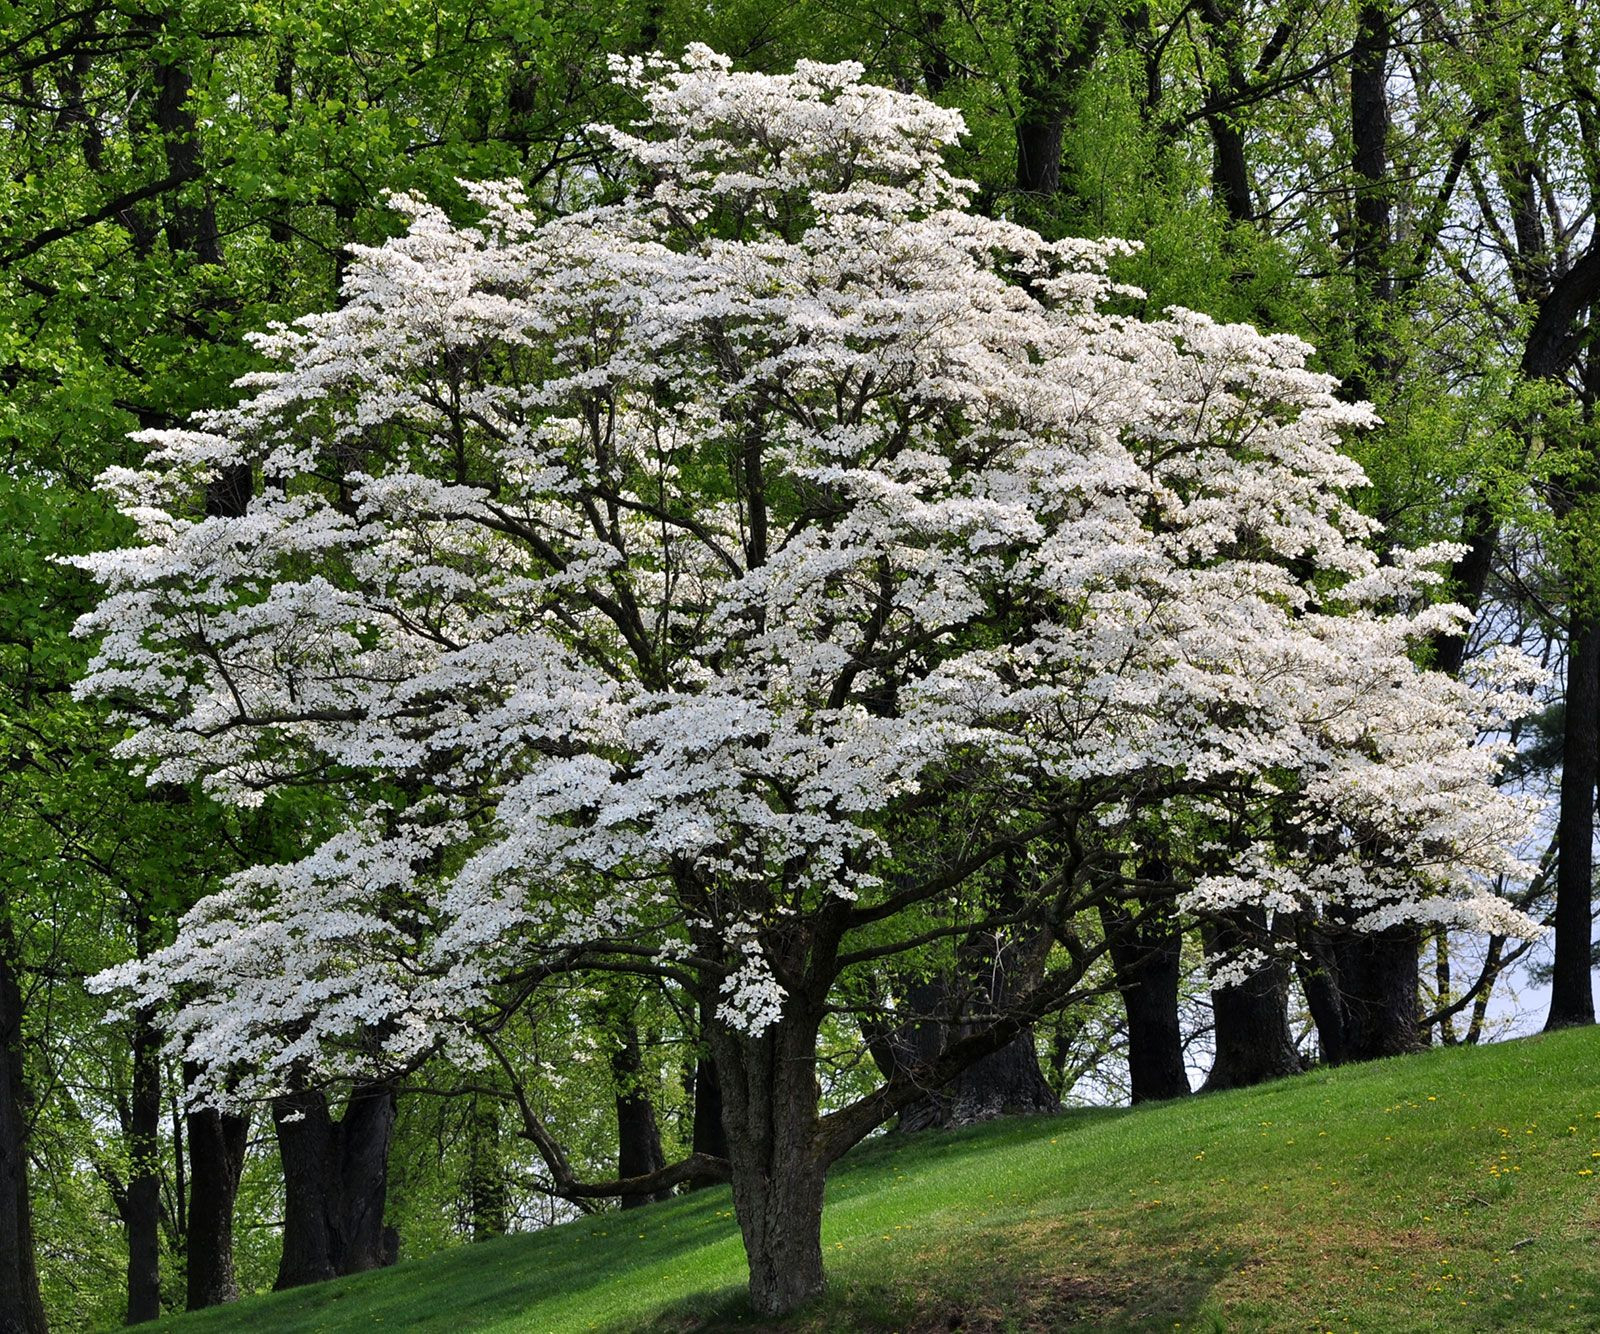 Dogwood | Description, Tree, Flowers, Major Species, & Facts